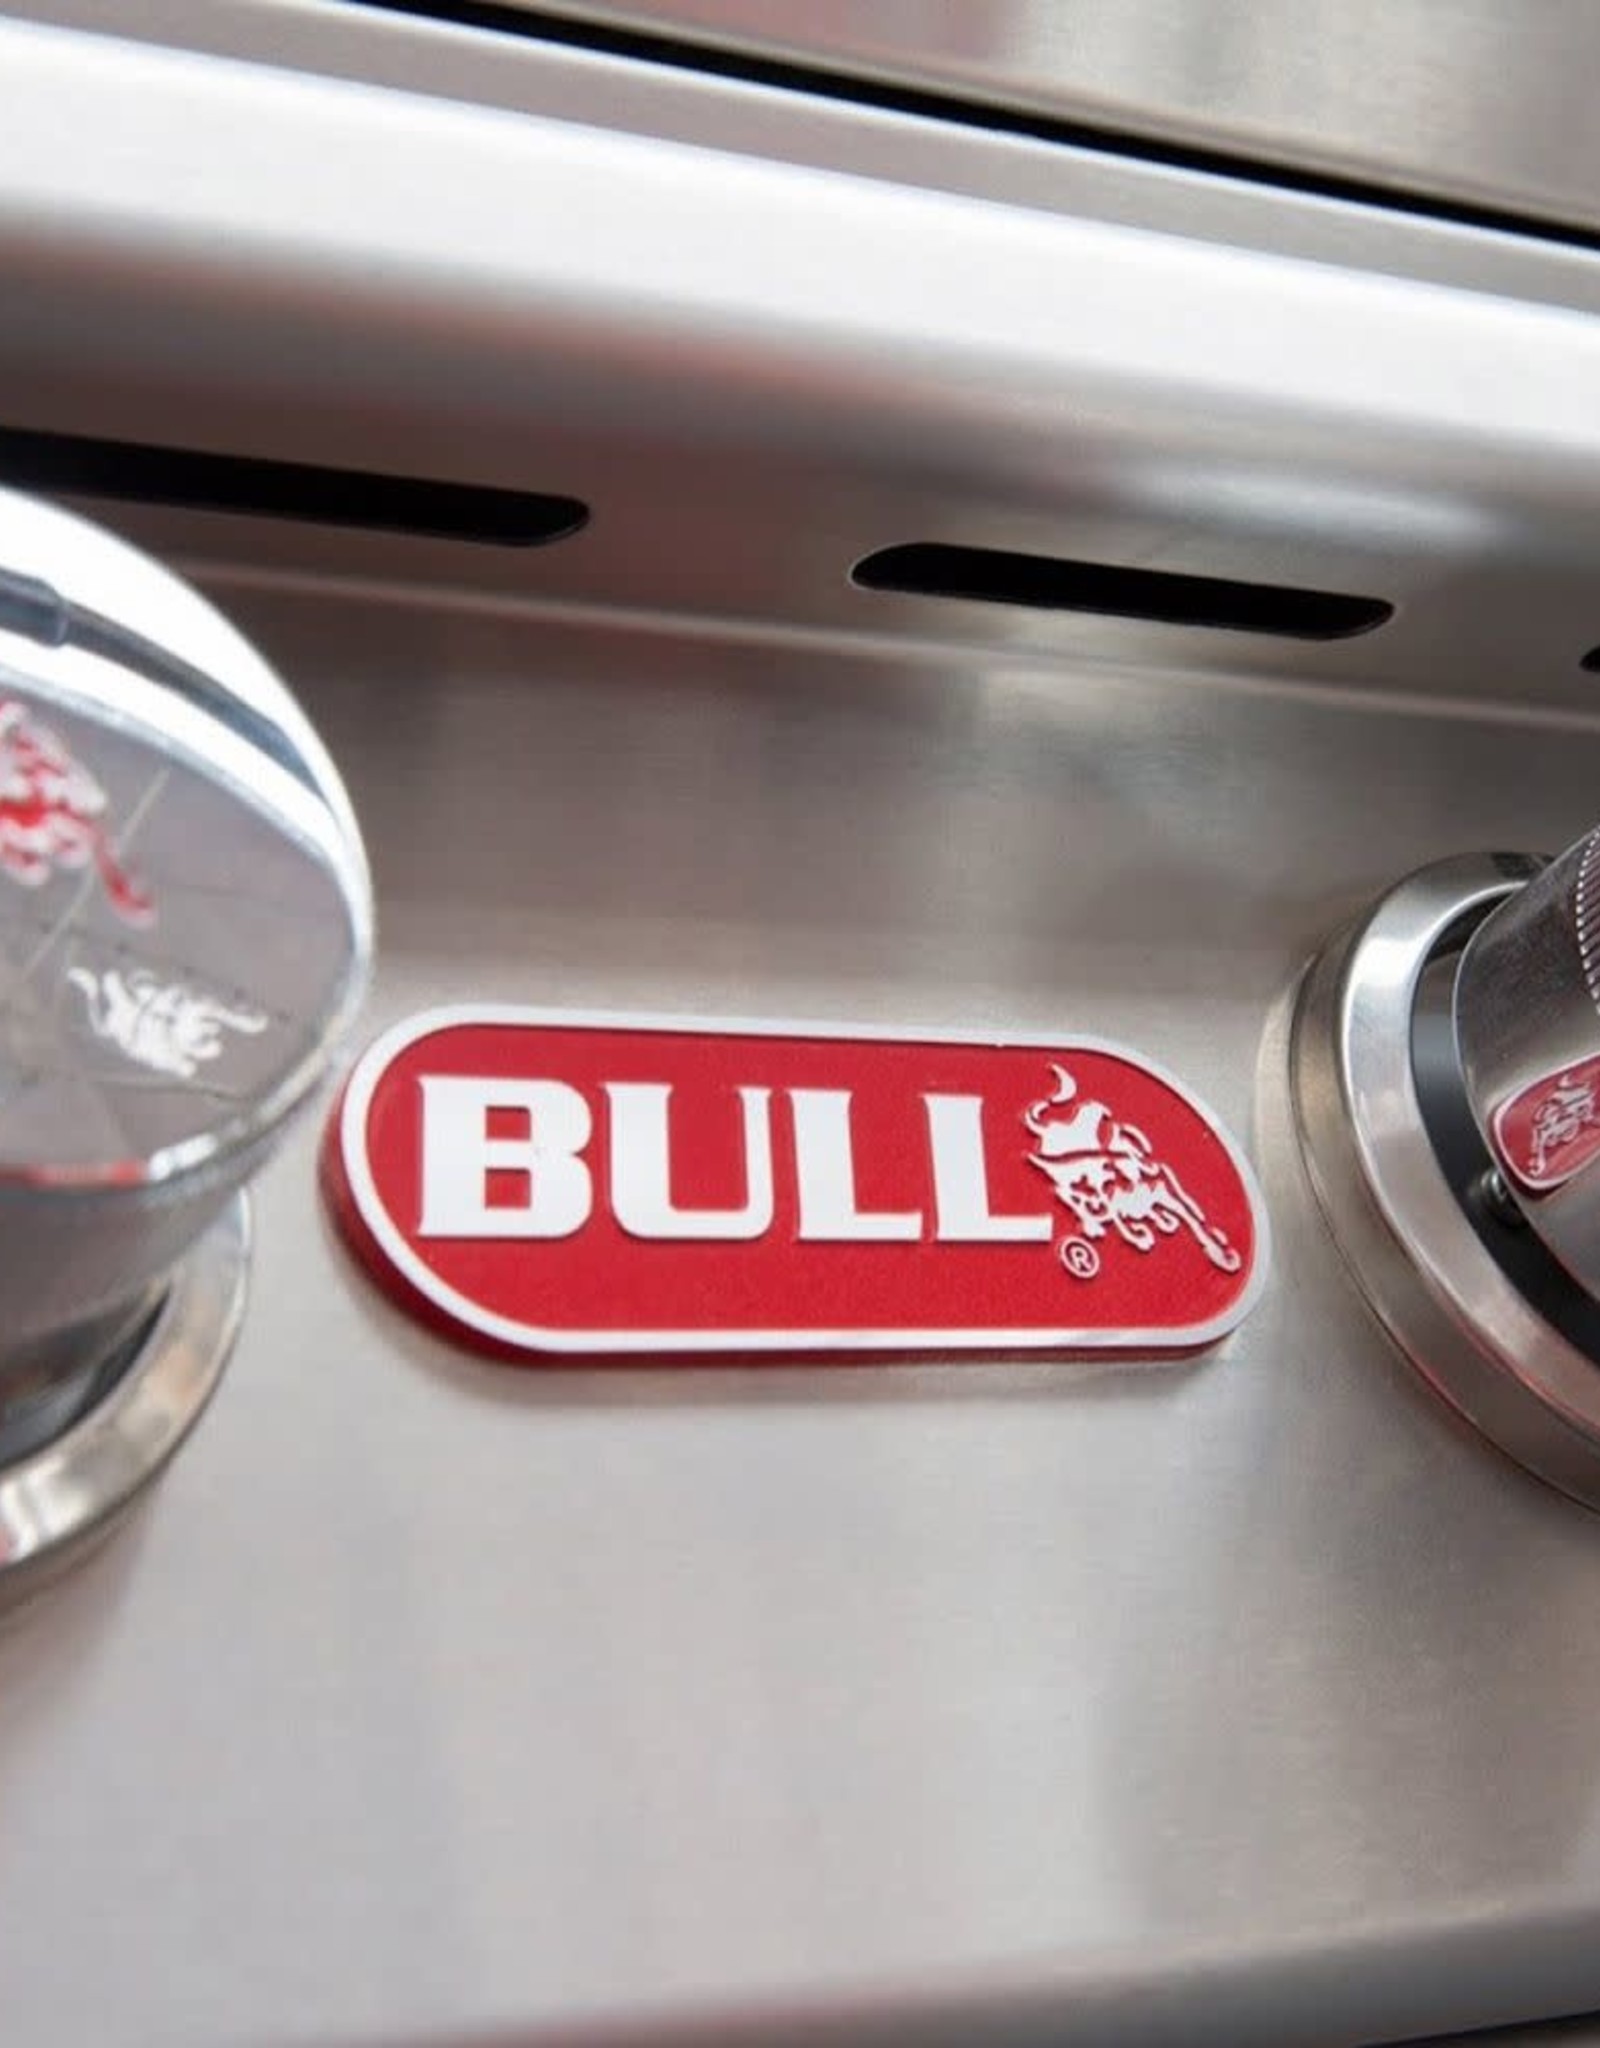 Bull Bull 24" Steer Premium 3-Burner Built-In Grill - 69008/69009